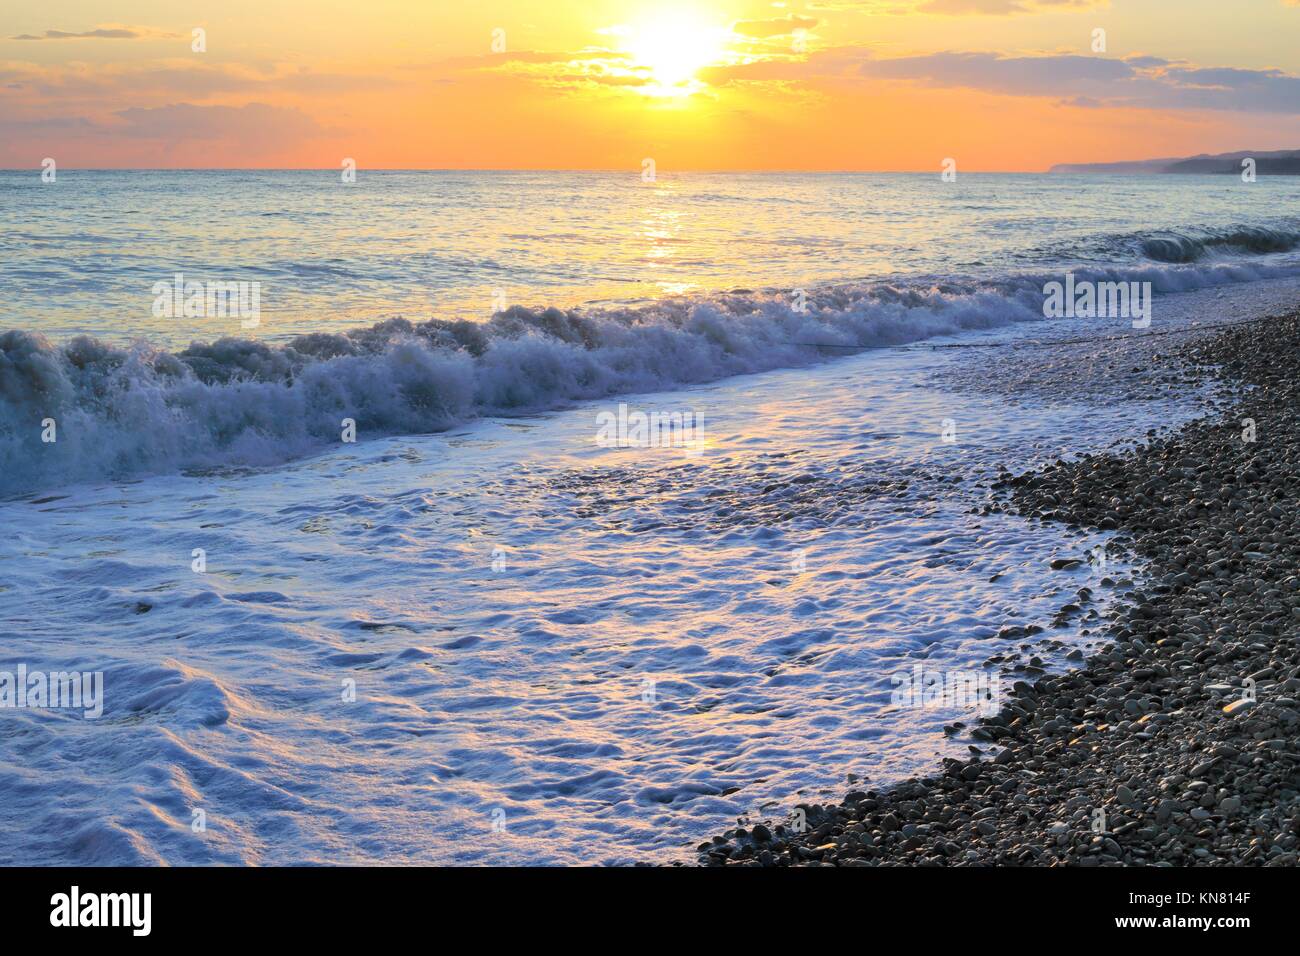 Seashore with pebble beach at sunset tide, Russia, Black sea Stock Photo